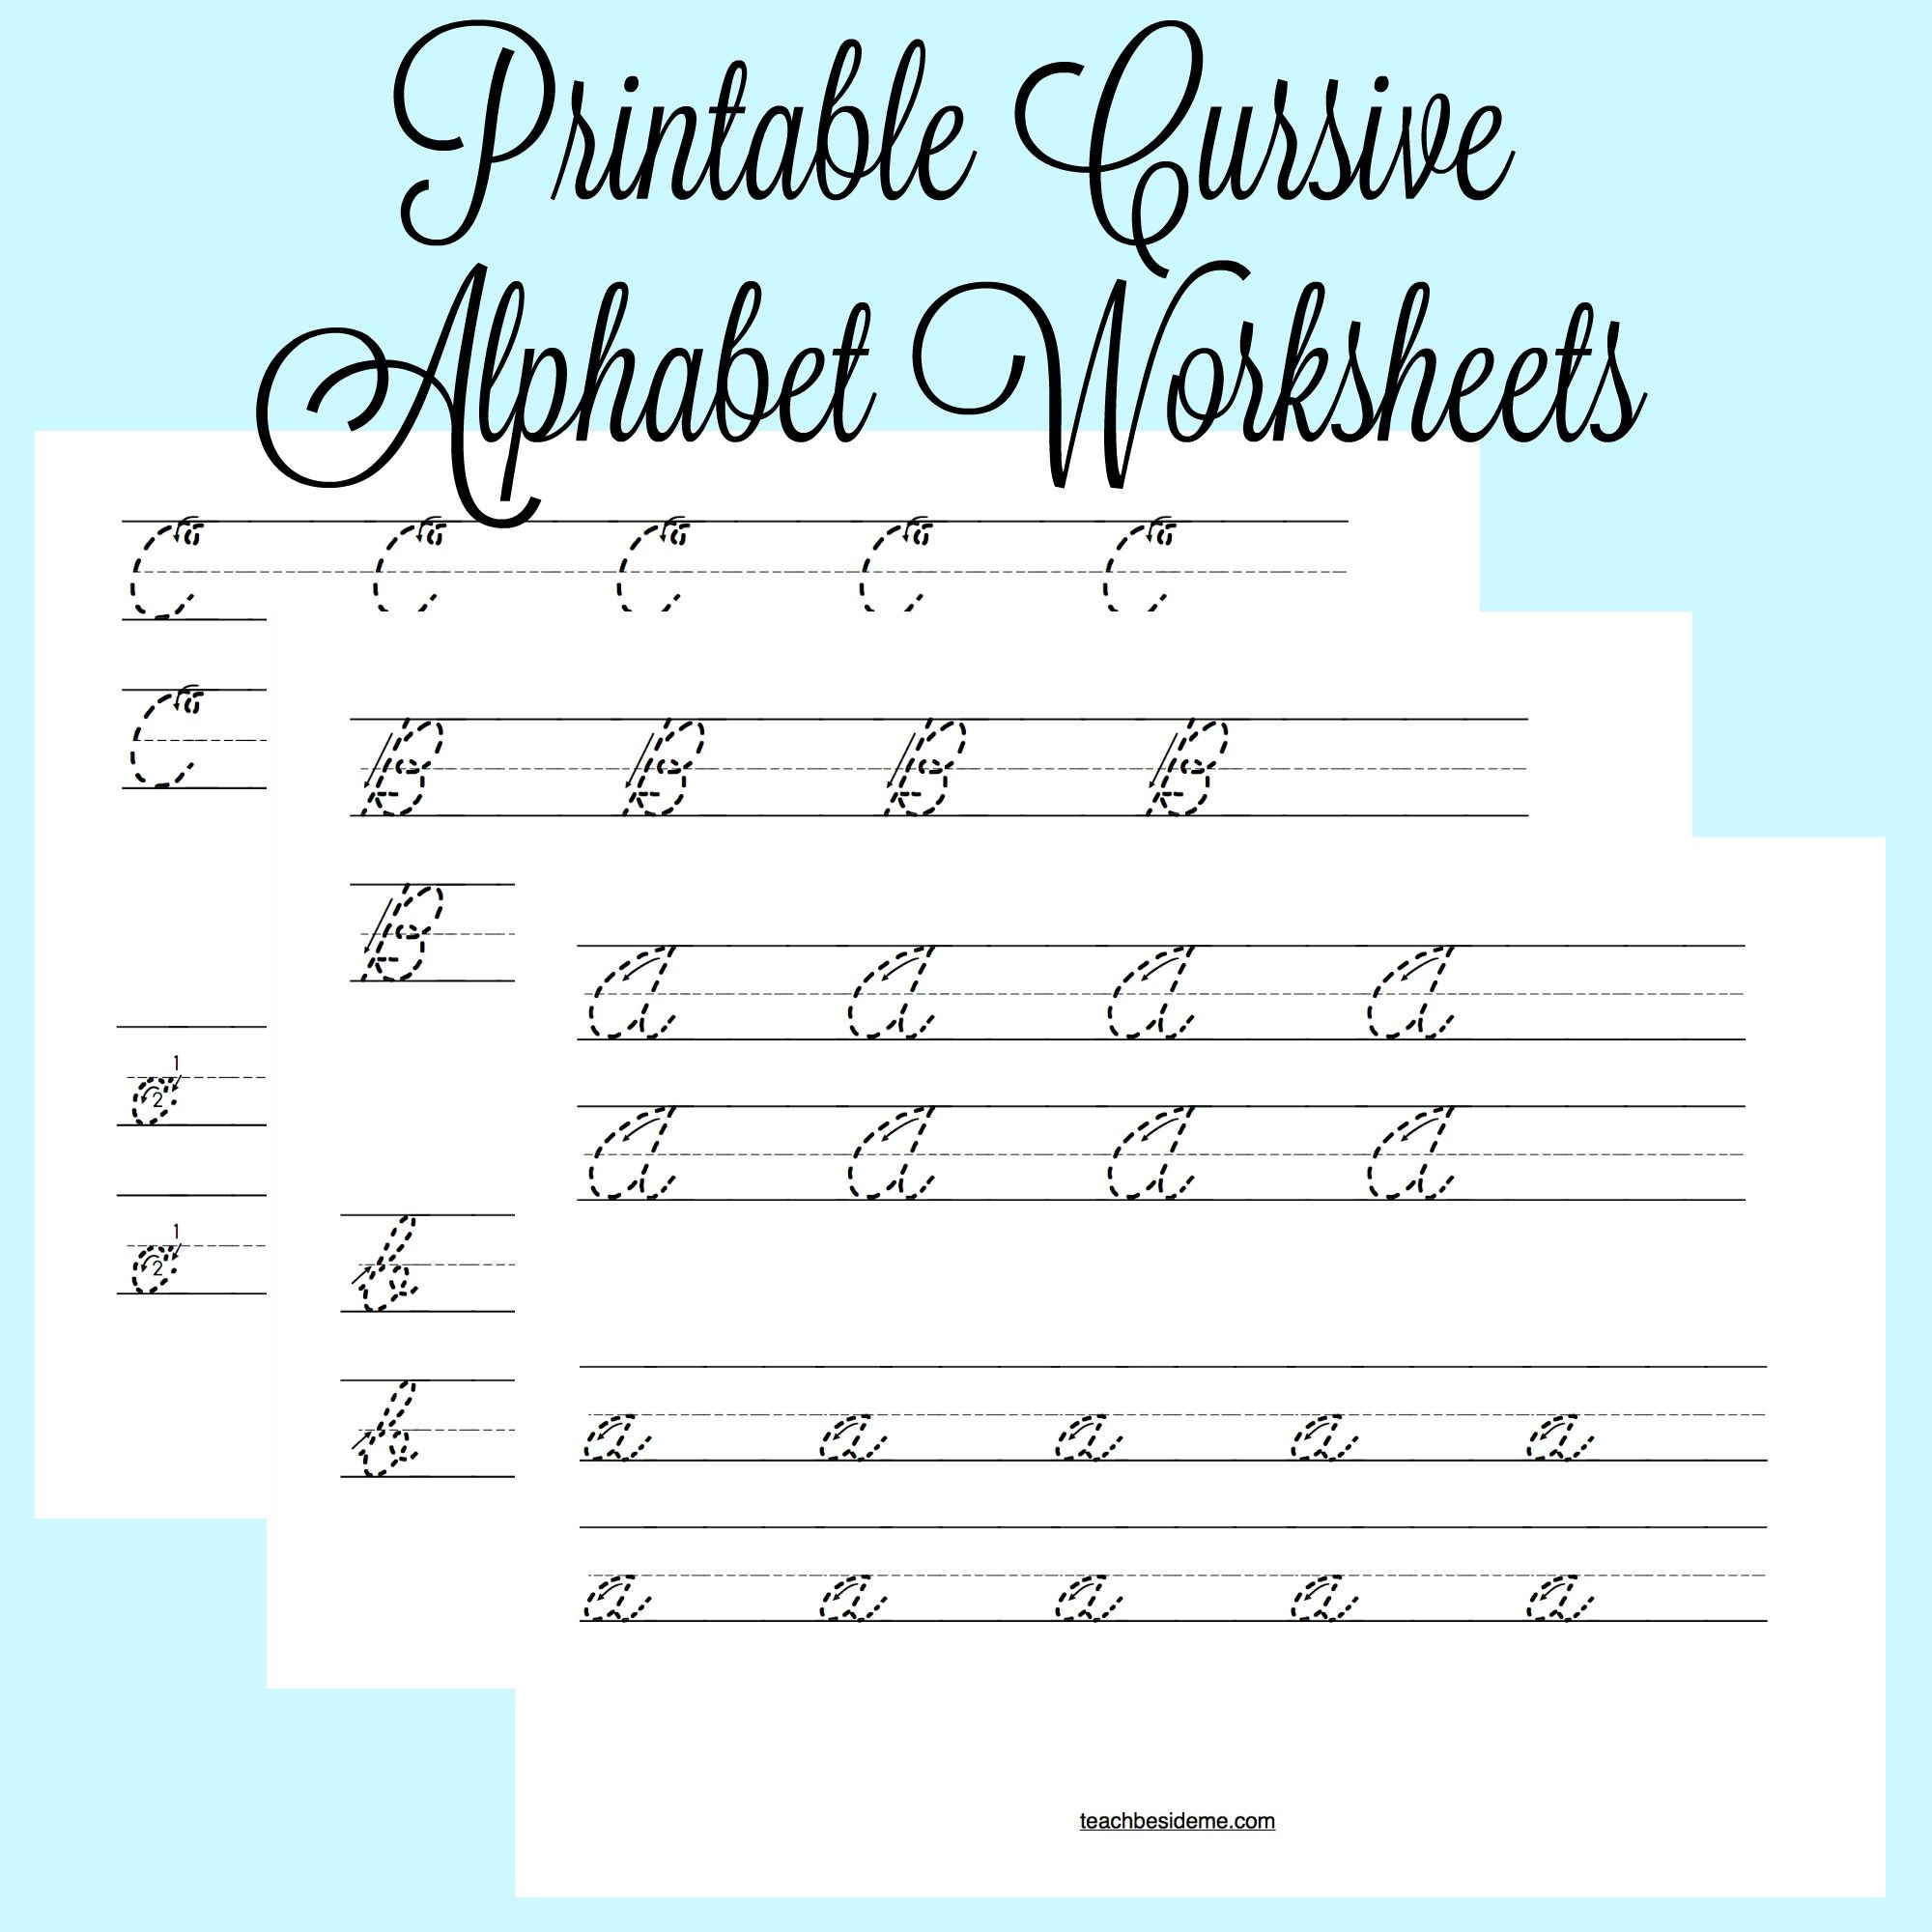 Printable Cursive Alphabet Worksheets | Cursive Writing